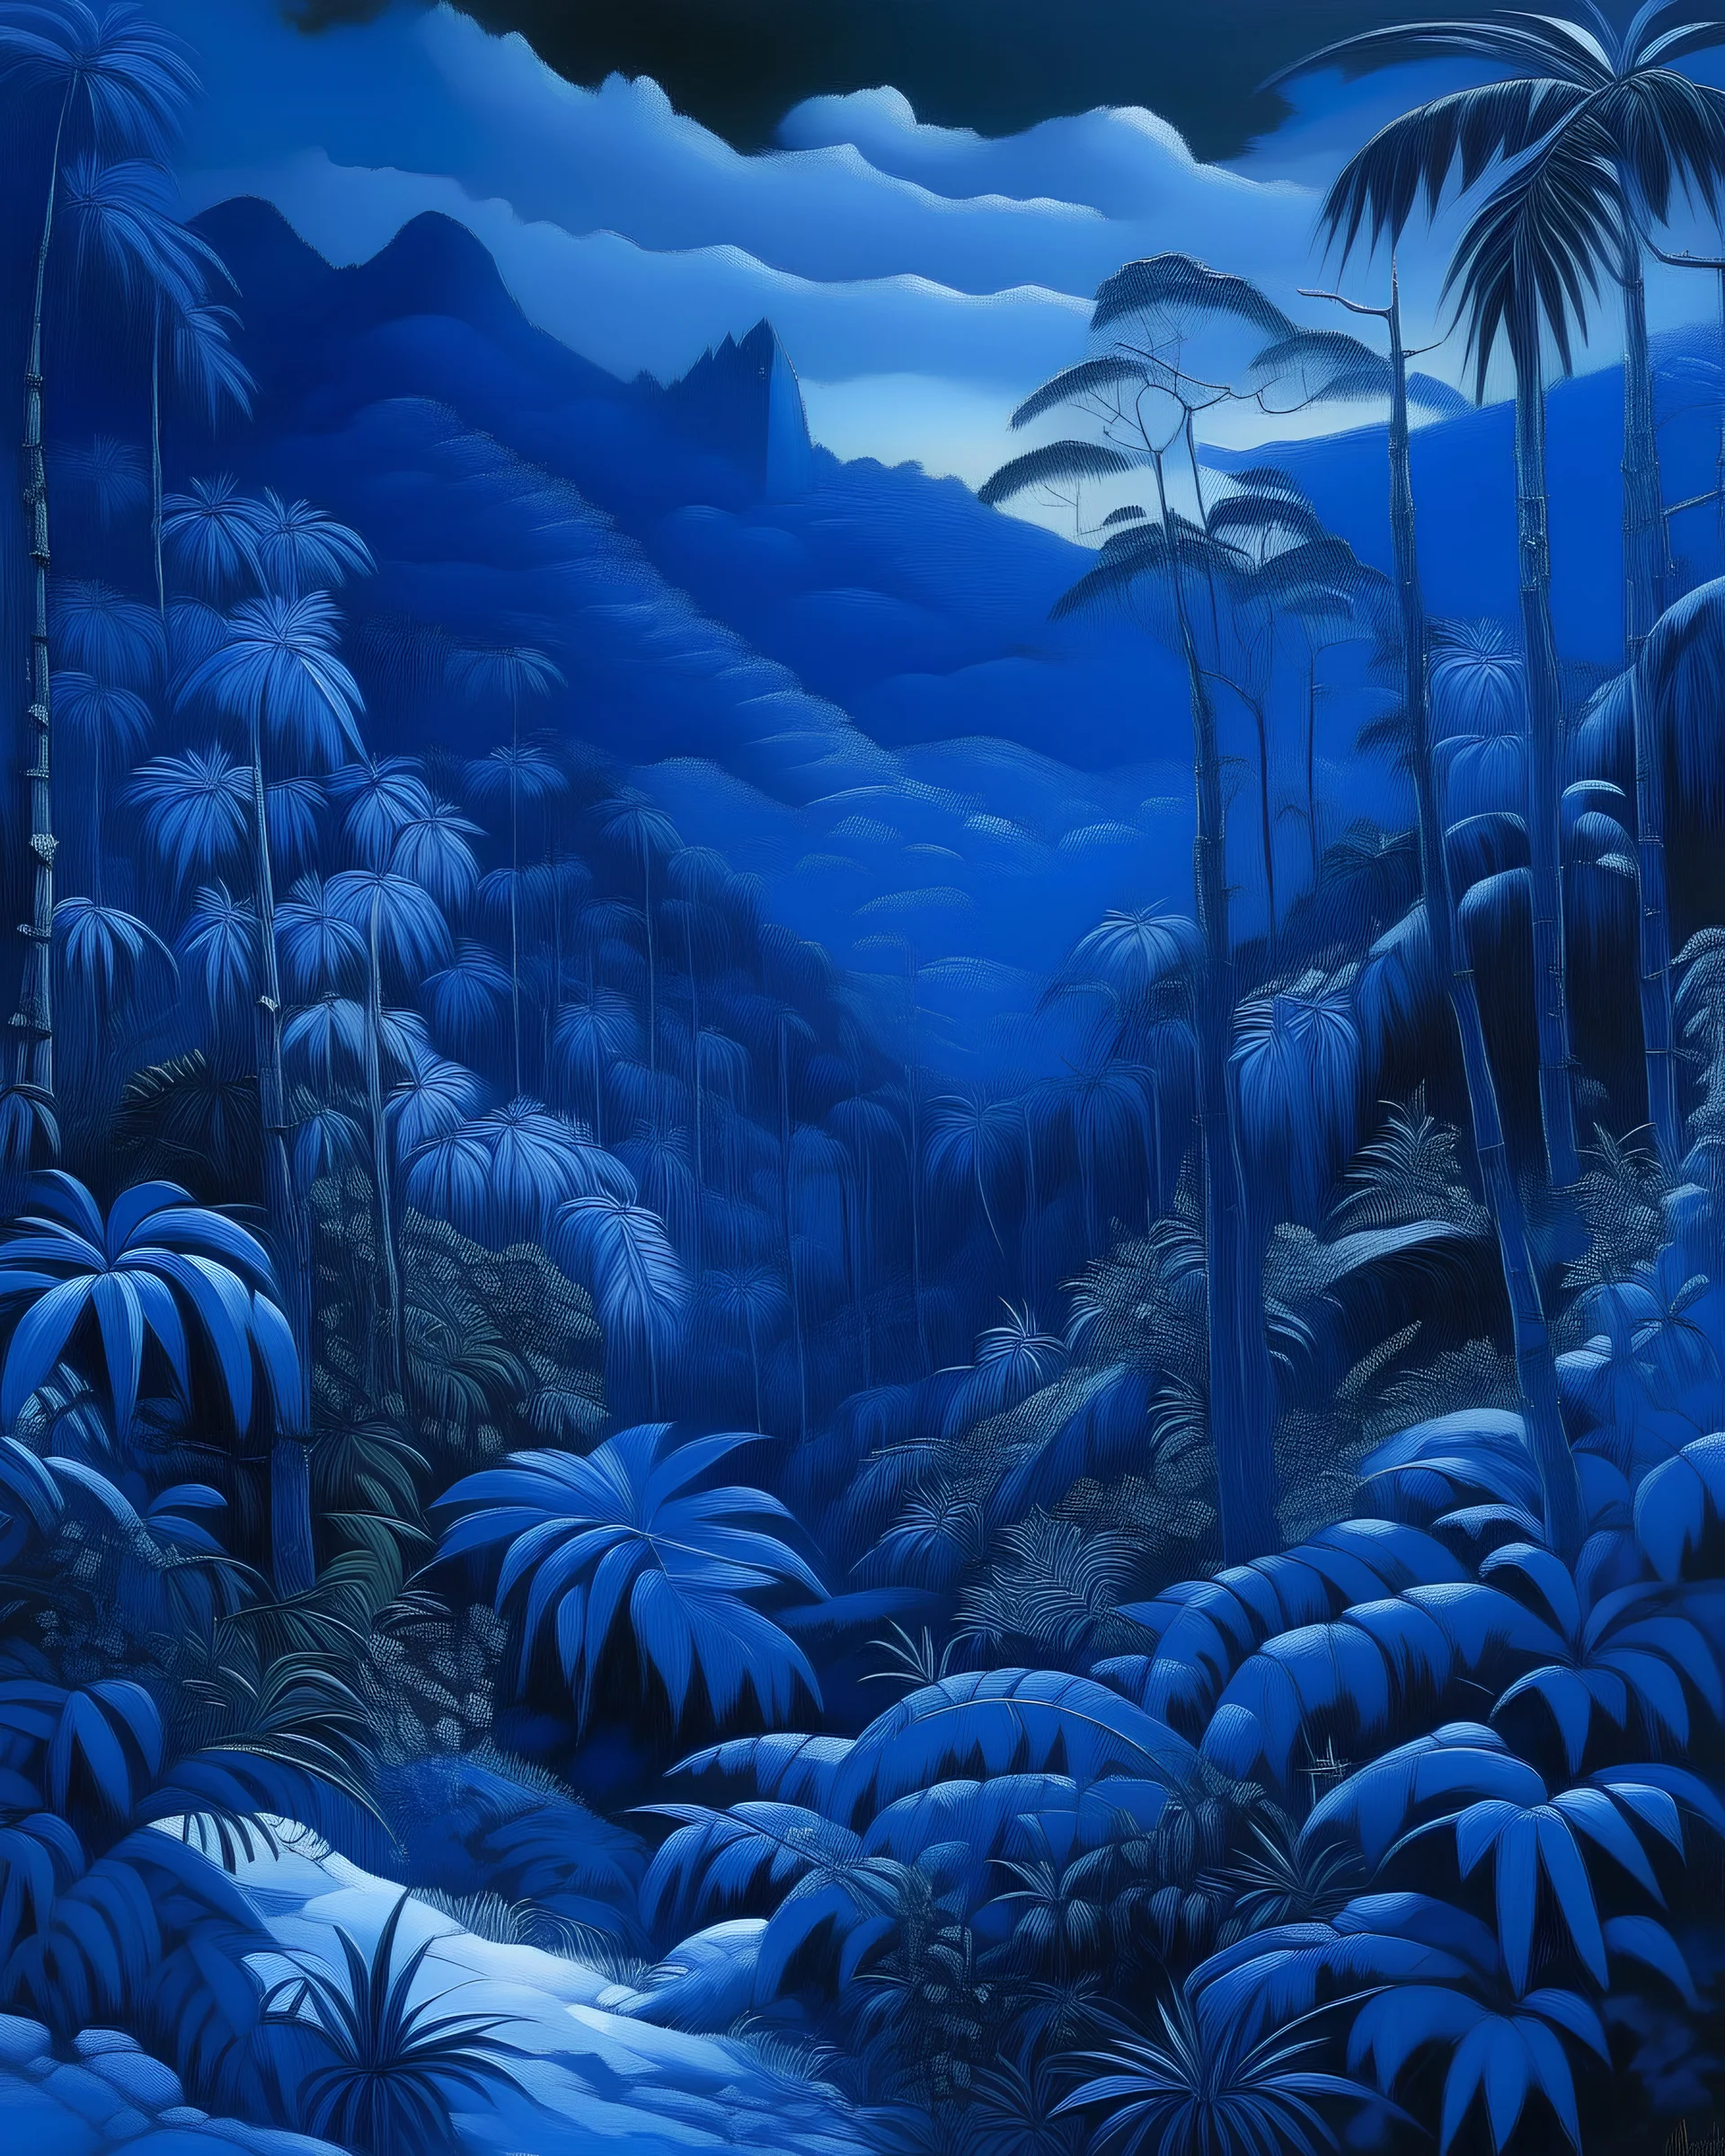 A dark cobalt blue jungle on a snowy mountain painted by Henry-Robert Brésil